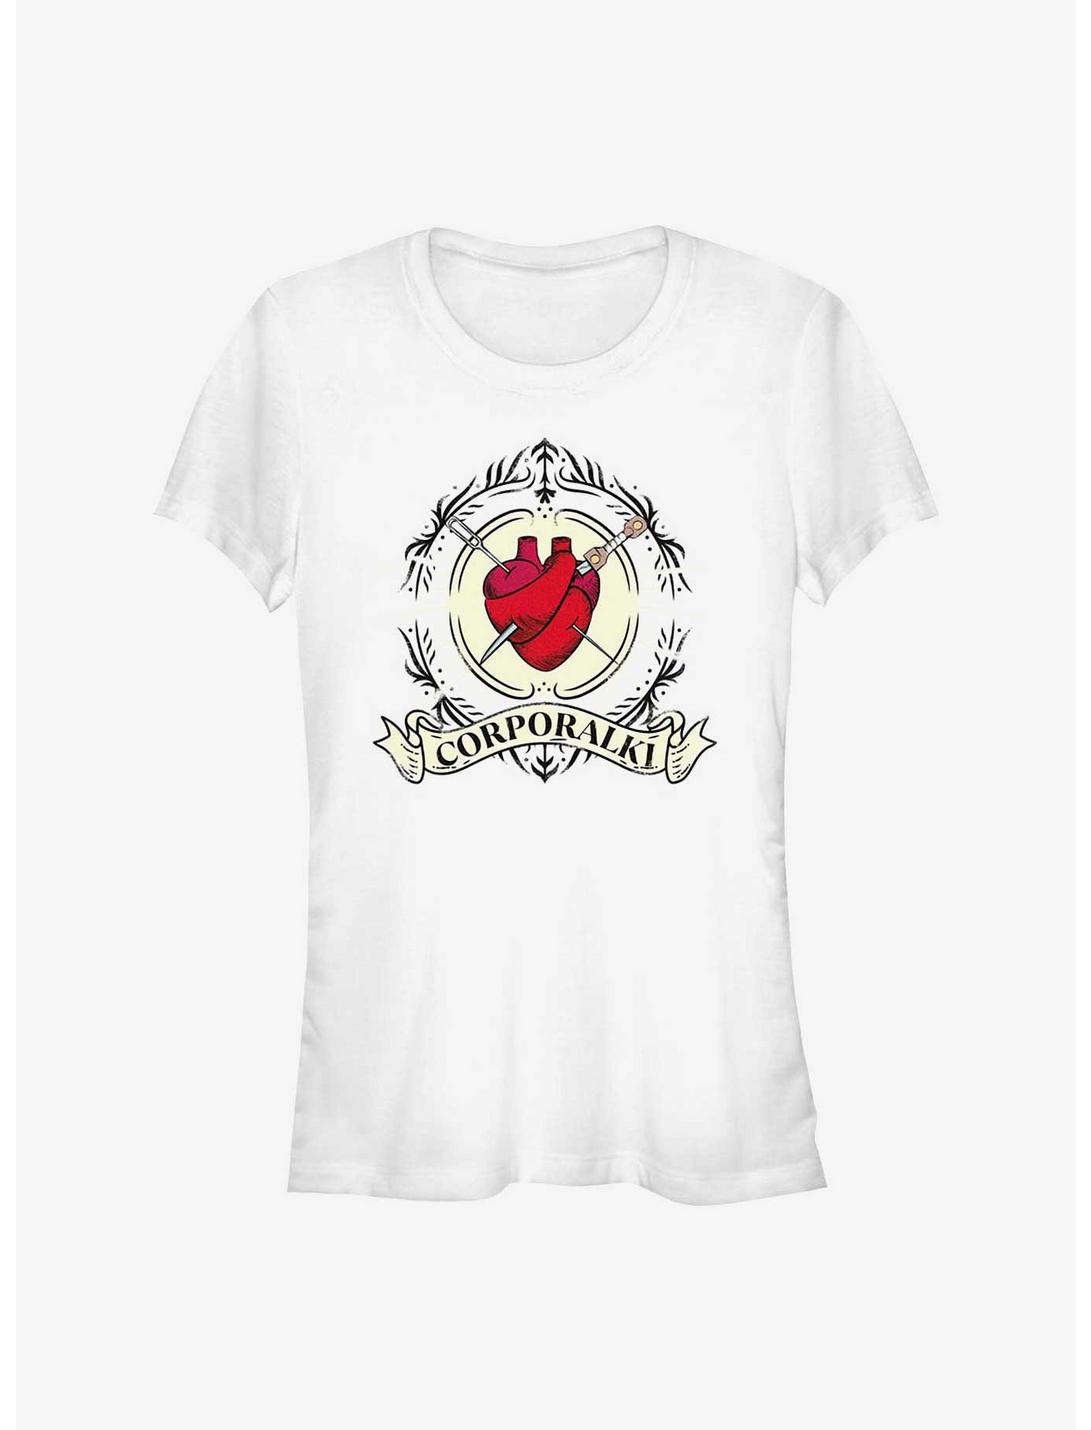 Shadow and Bone Corporalki Heart Girls T-Shirt, WHITE, hi-res